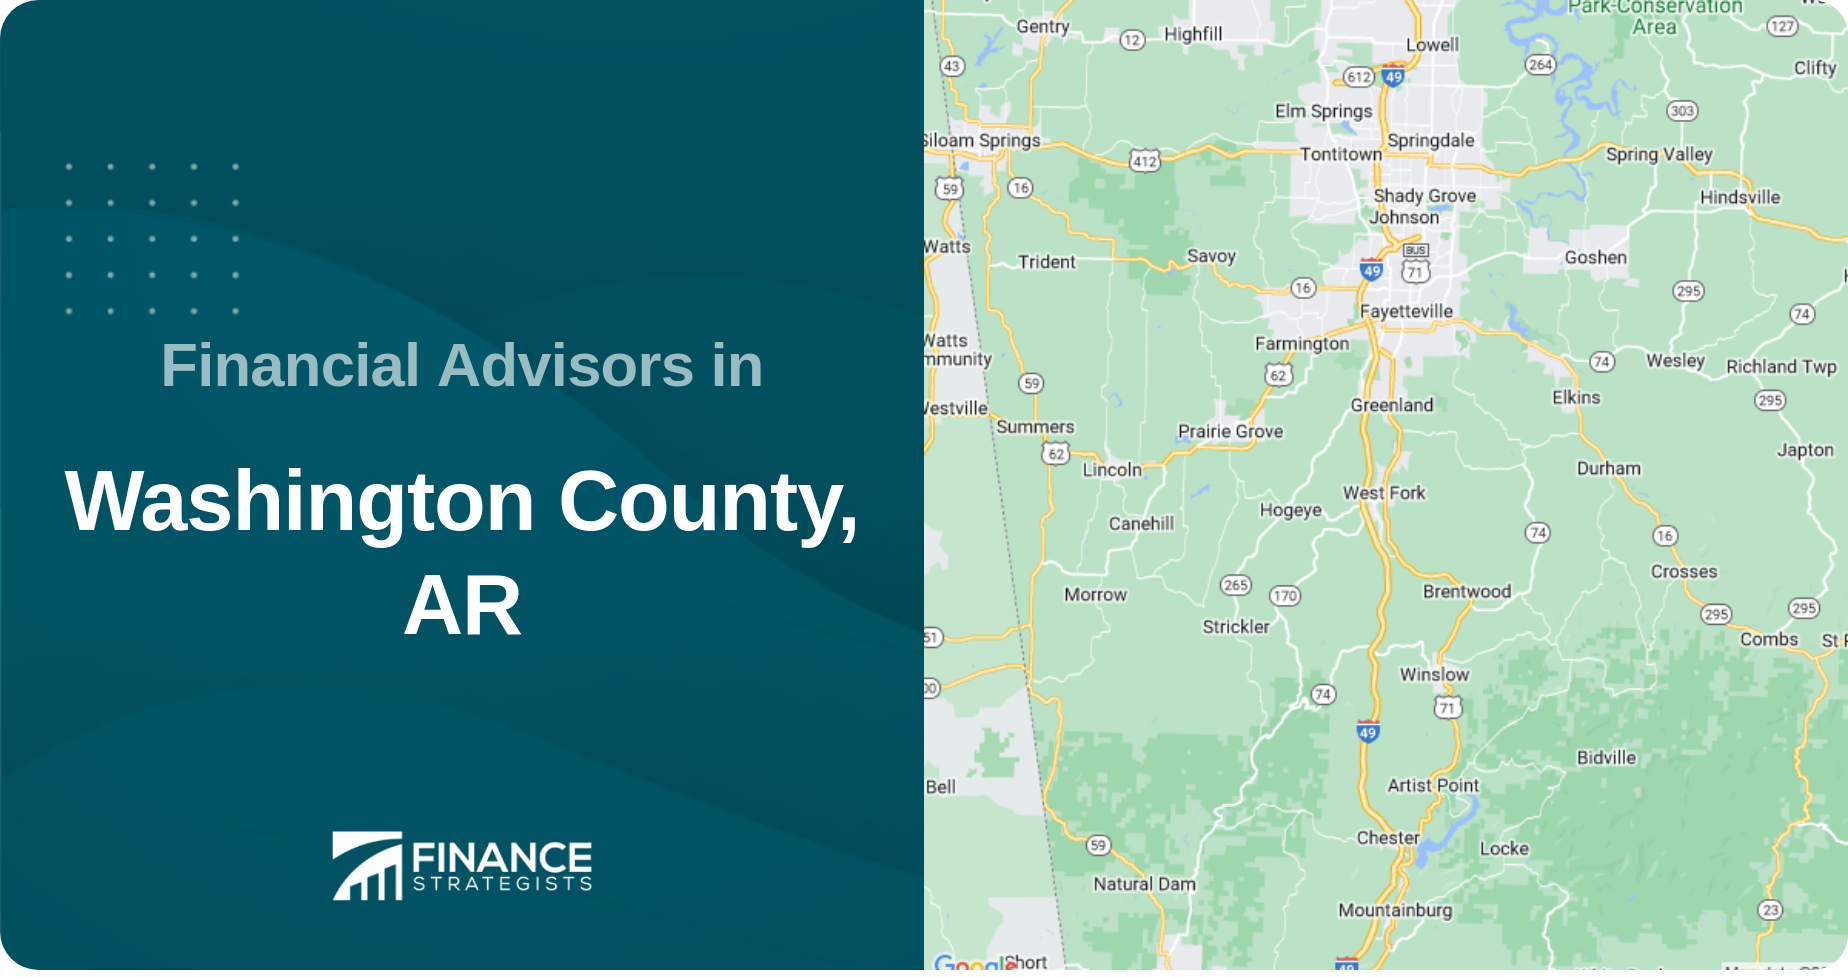 Financial Advisors in Washington County, AR